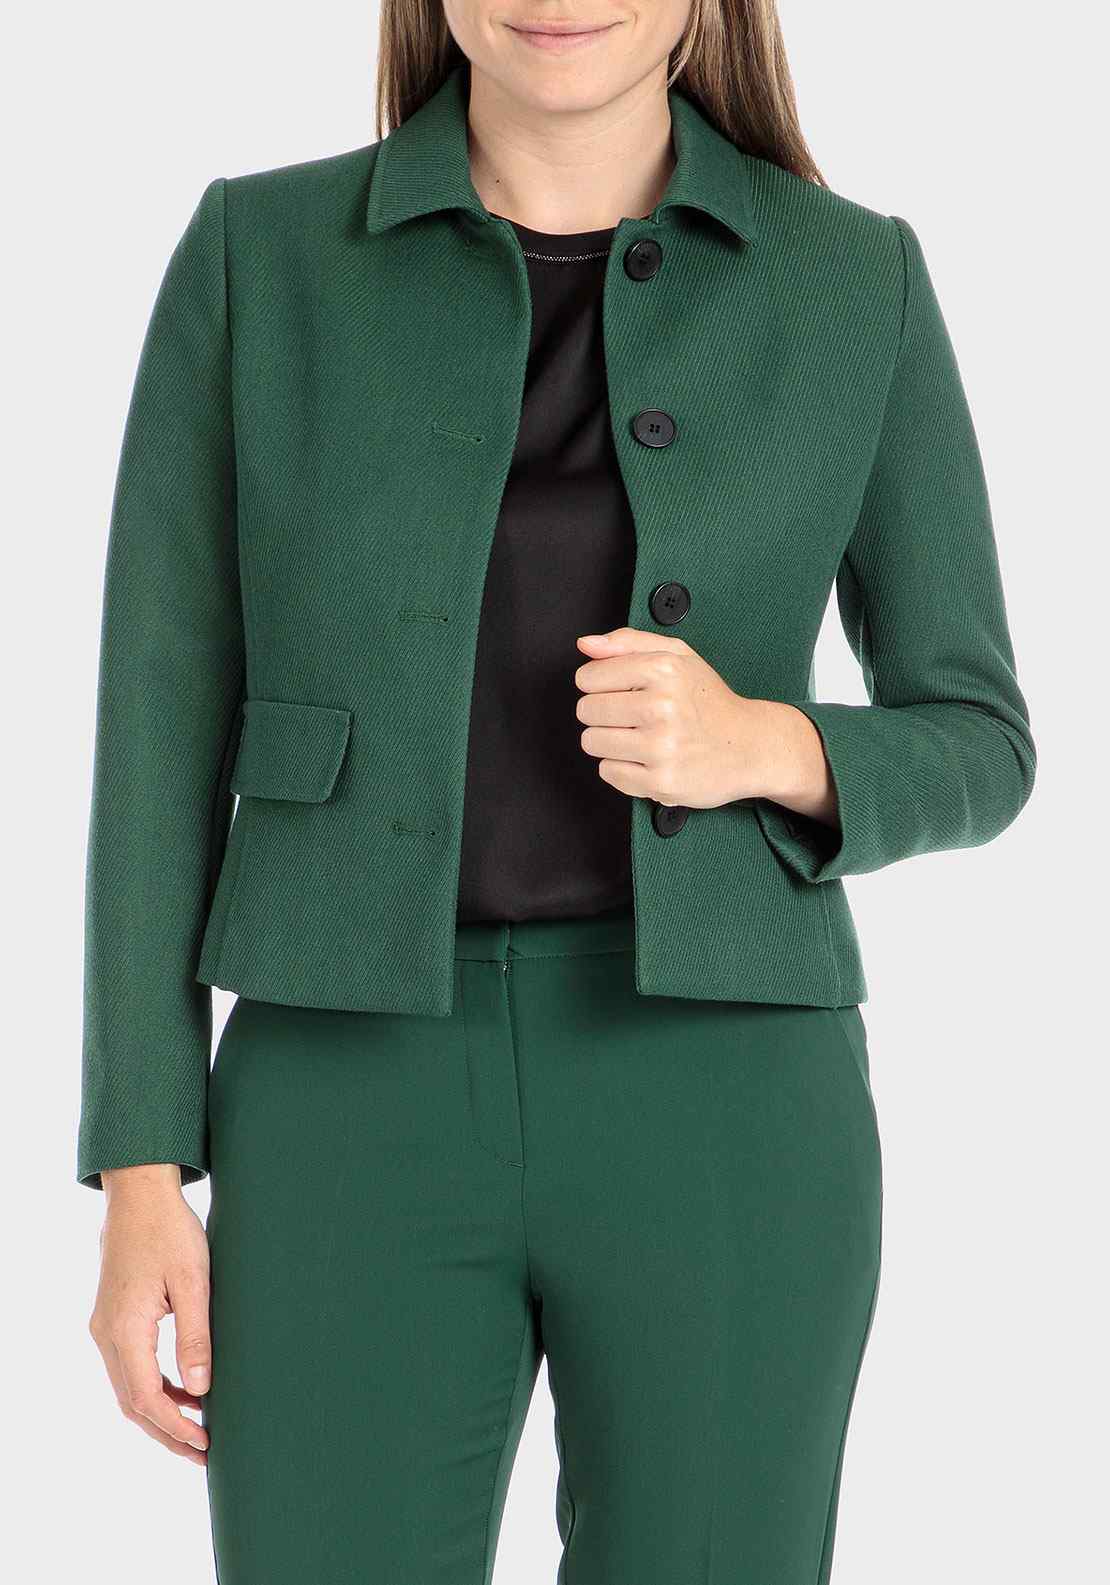 Punt Roma Green Jacket - Green 1 Shaws Department Stores